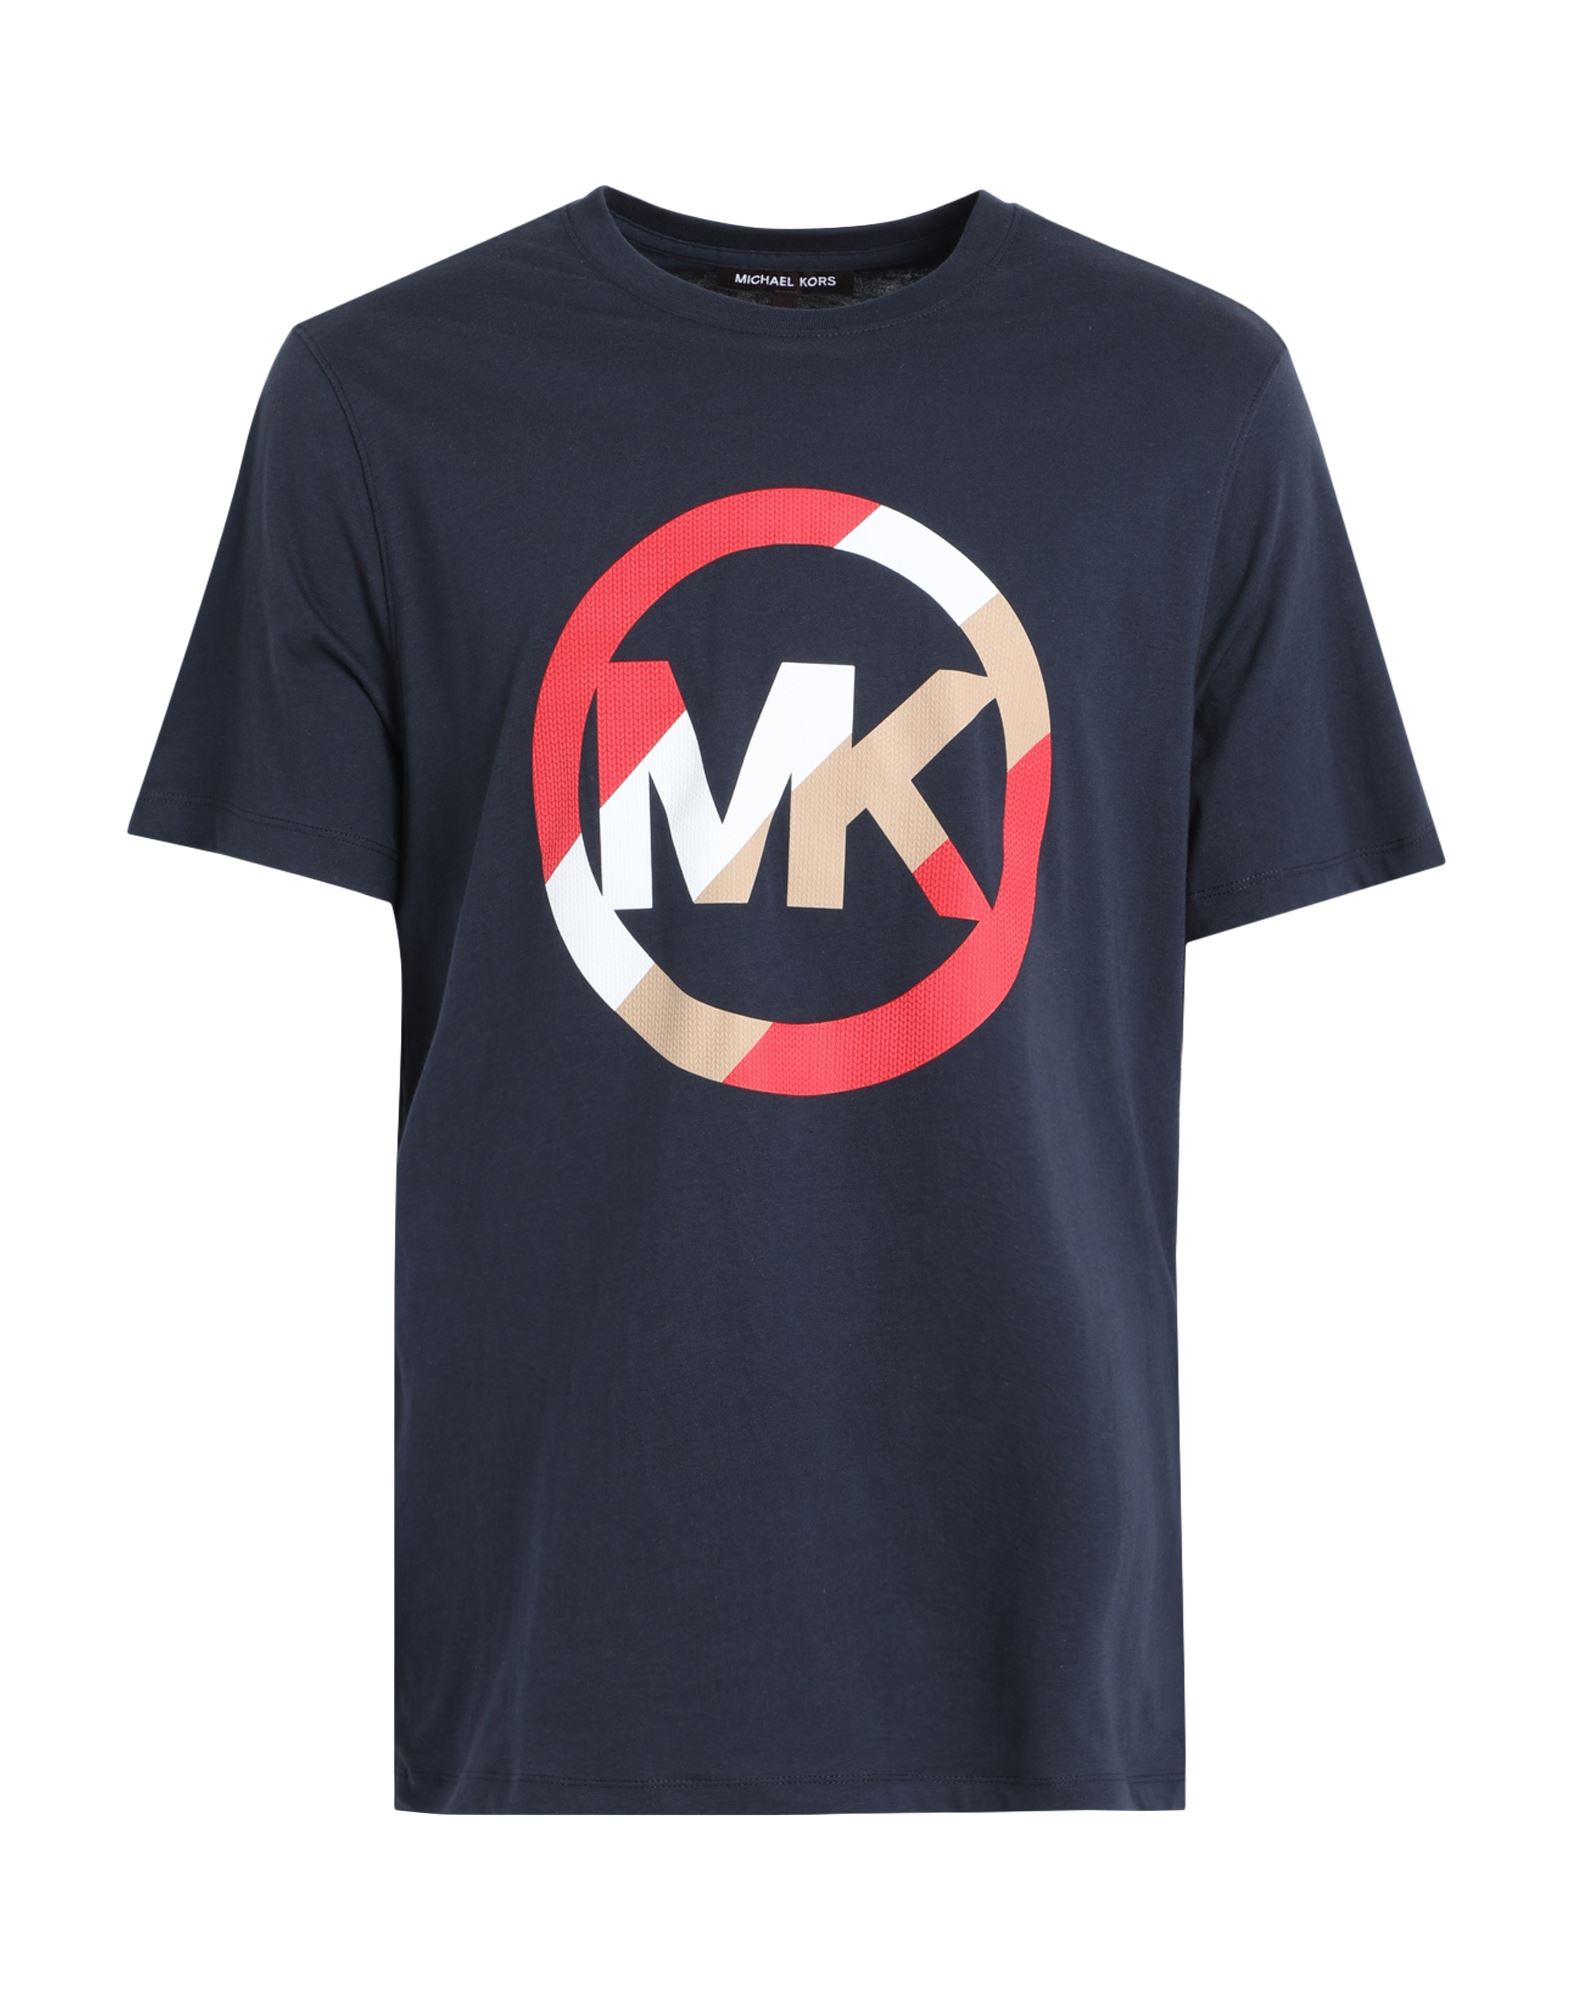 MICHAEL KORS MENS T-shirts Herren Marineblau von MICHAEL KORS MENS